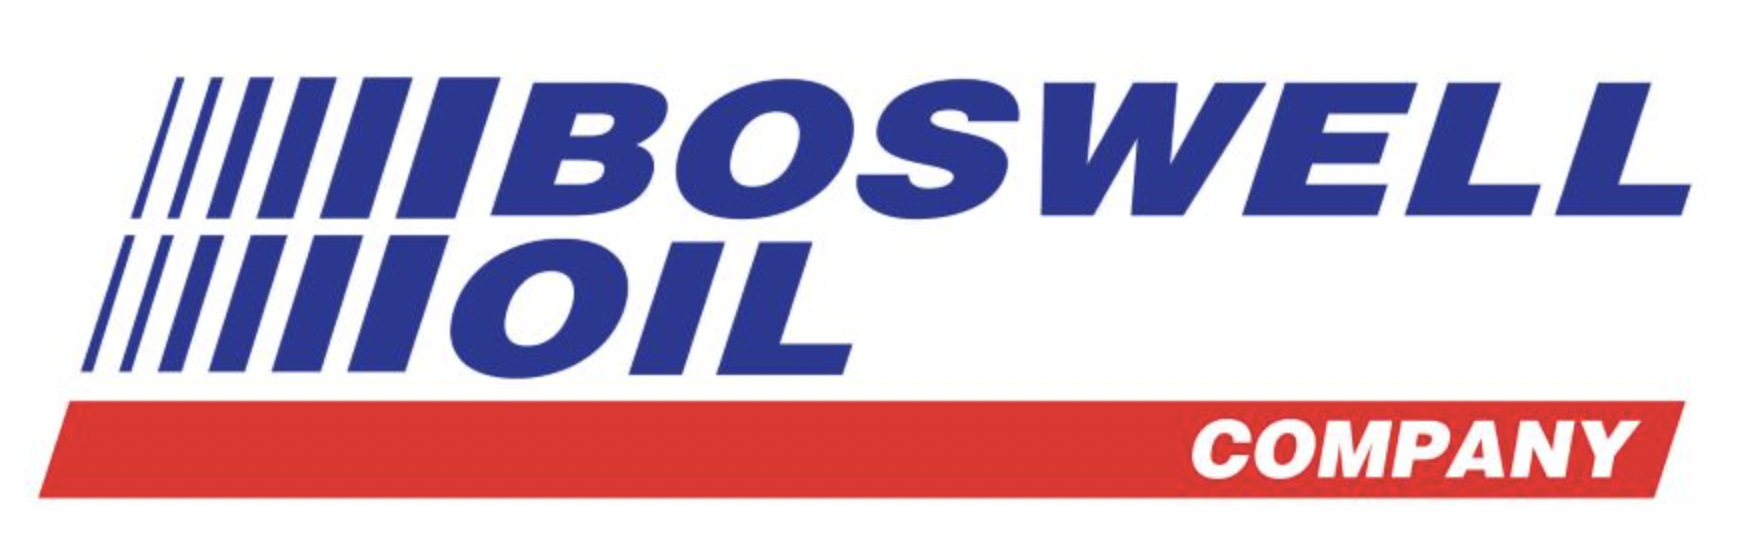 Boswell Oil